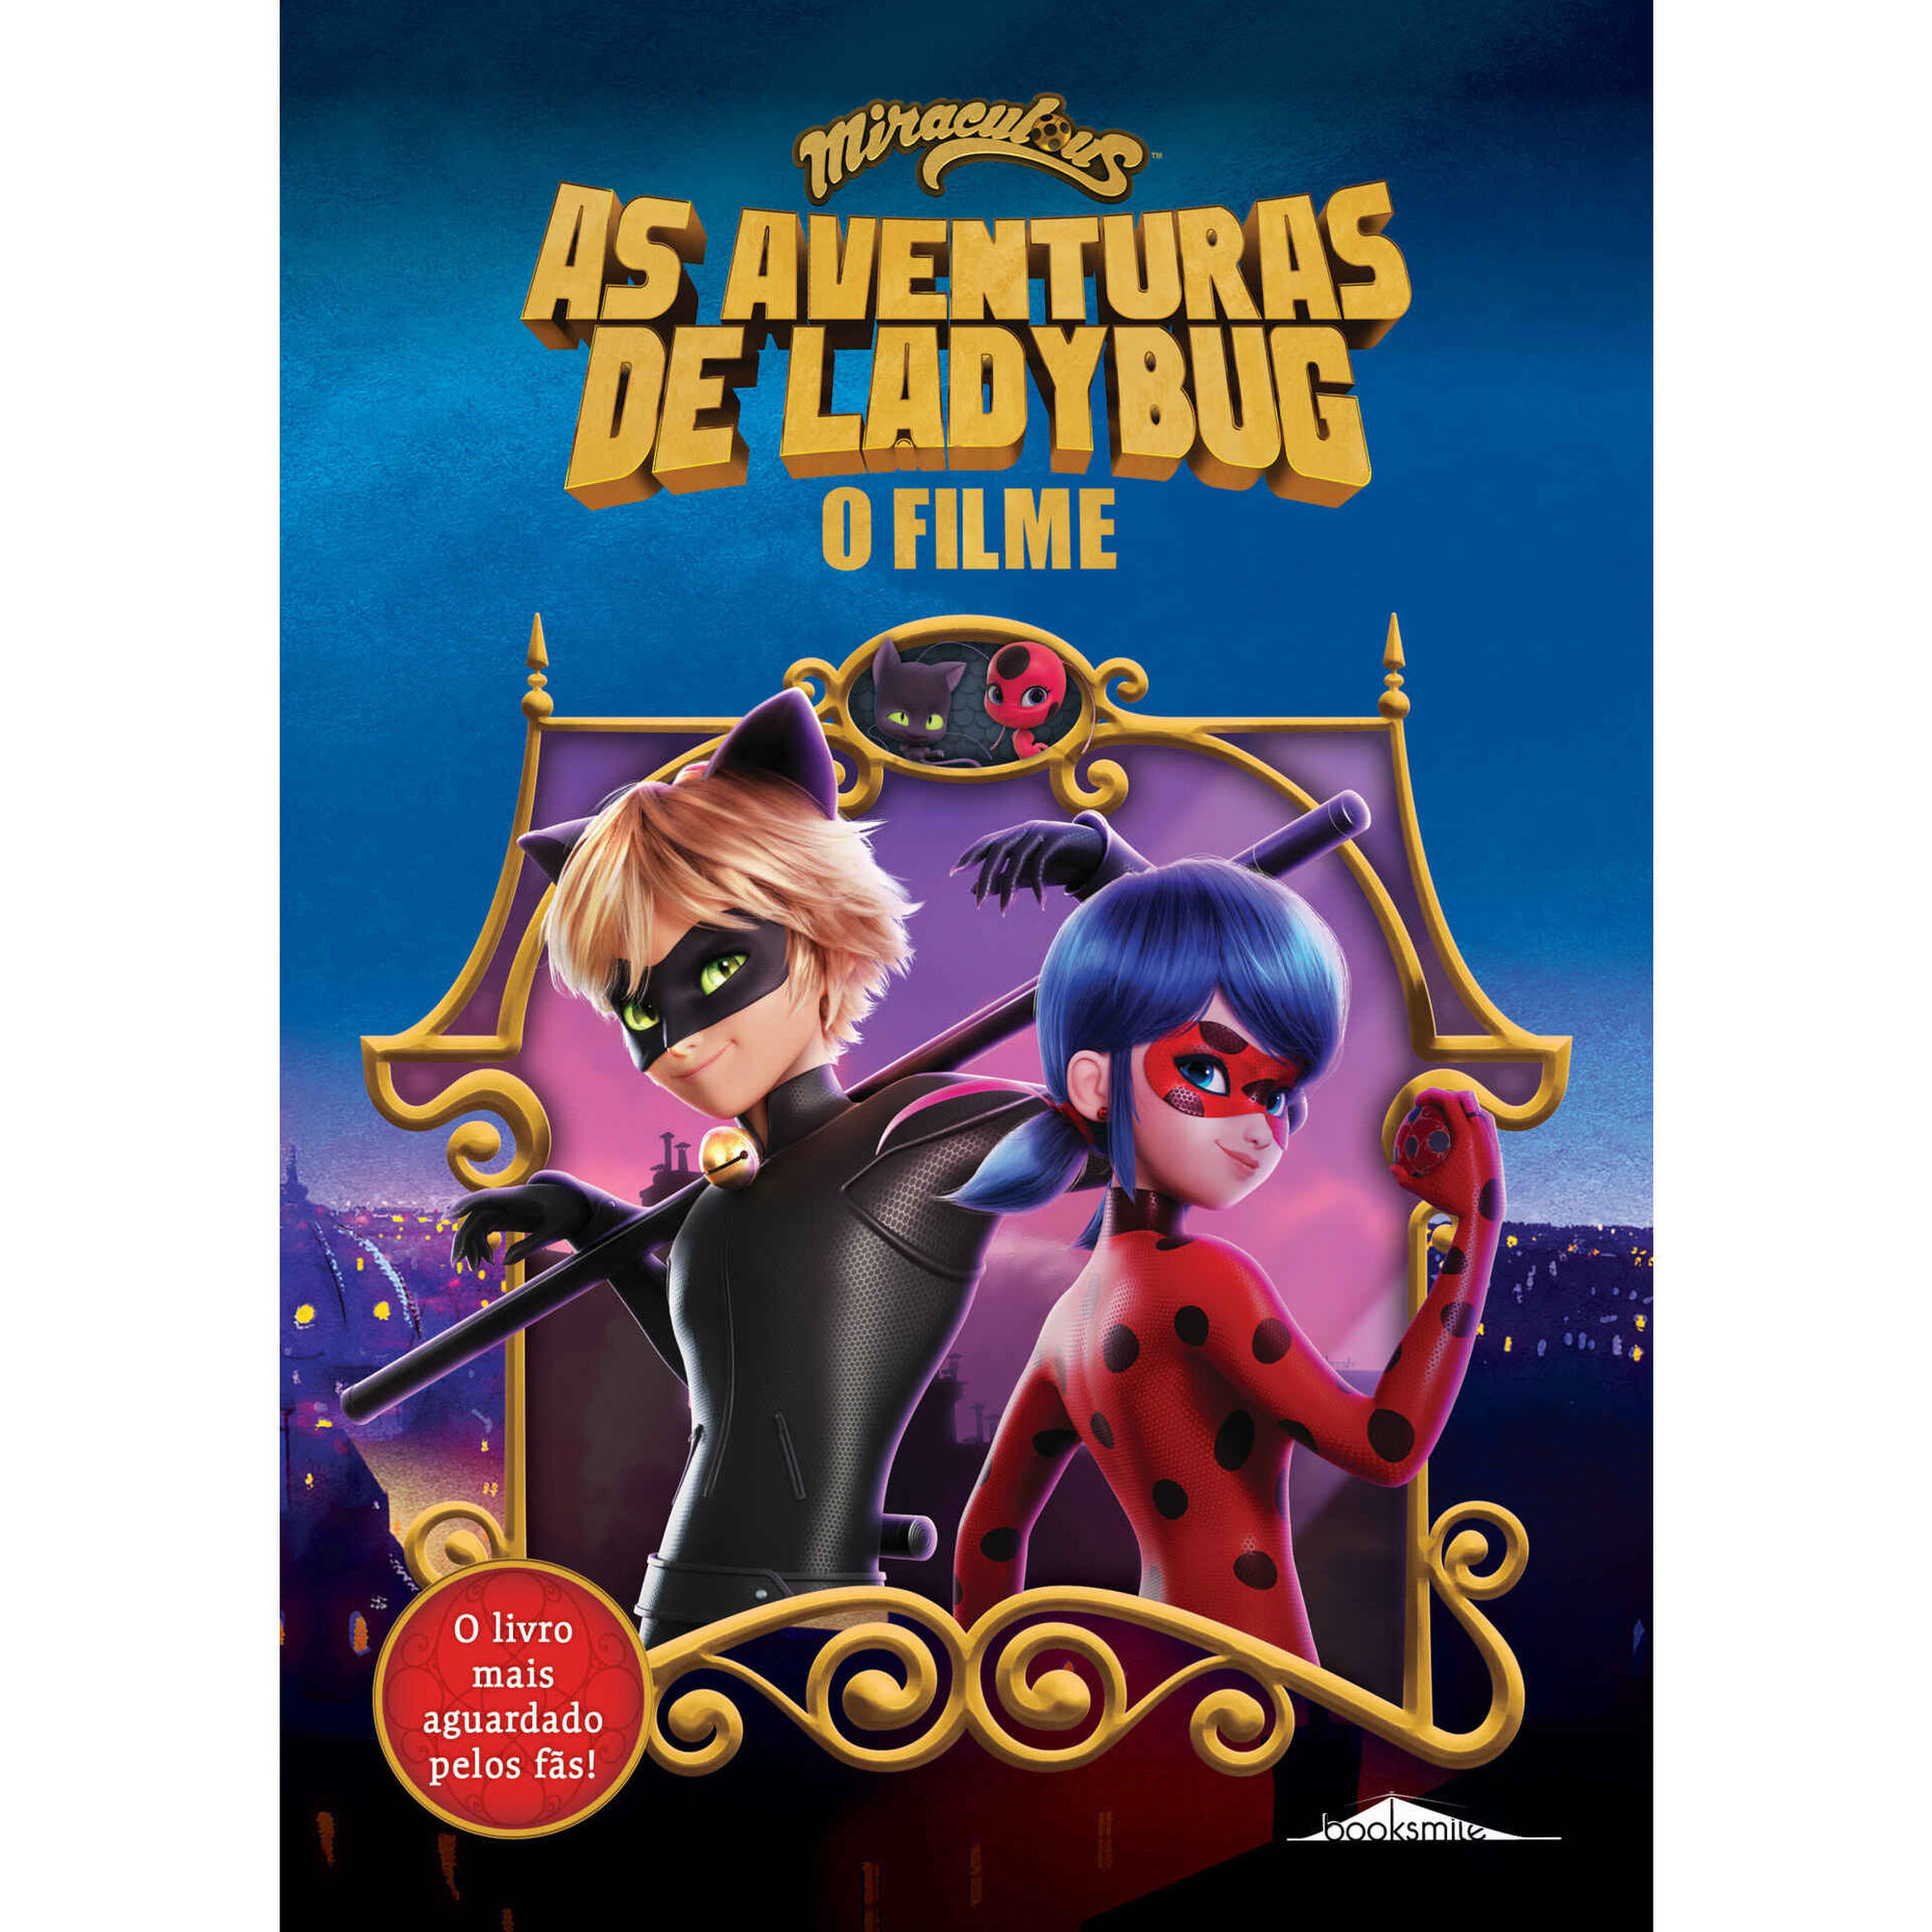 DIY Miraculous: Caderno de DESENHO da Marinette + TODOS Kwamis + Ladybug Cat  Noir